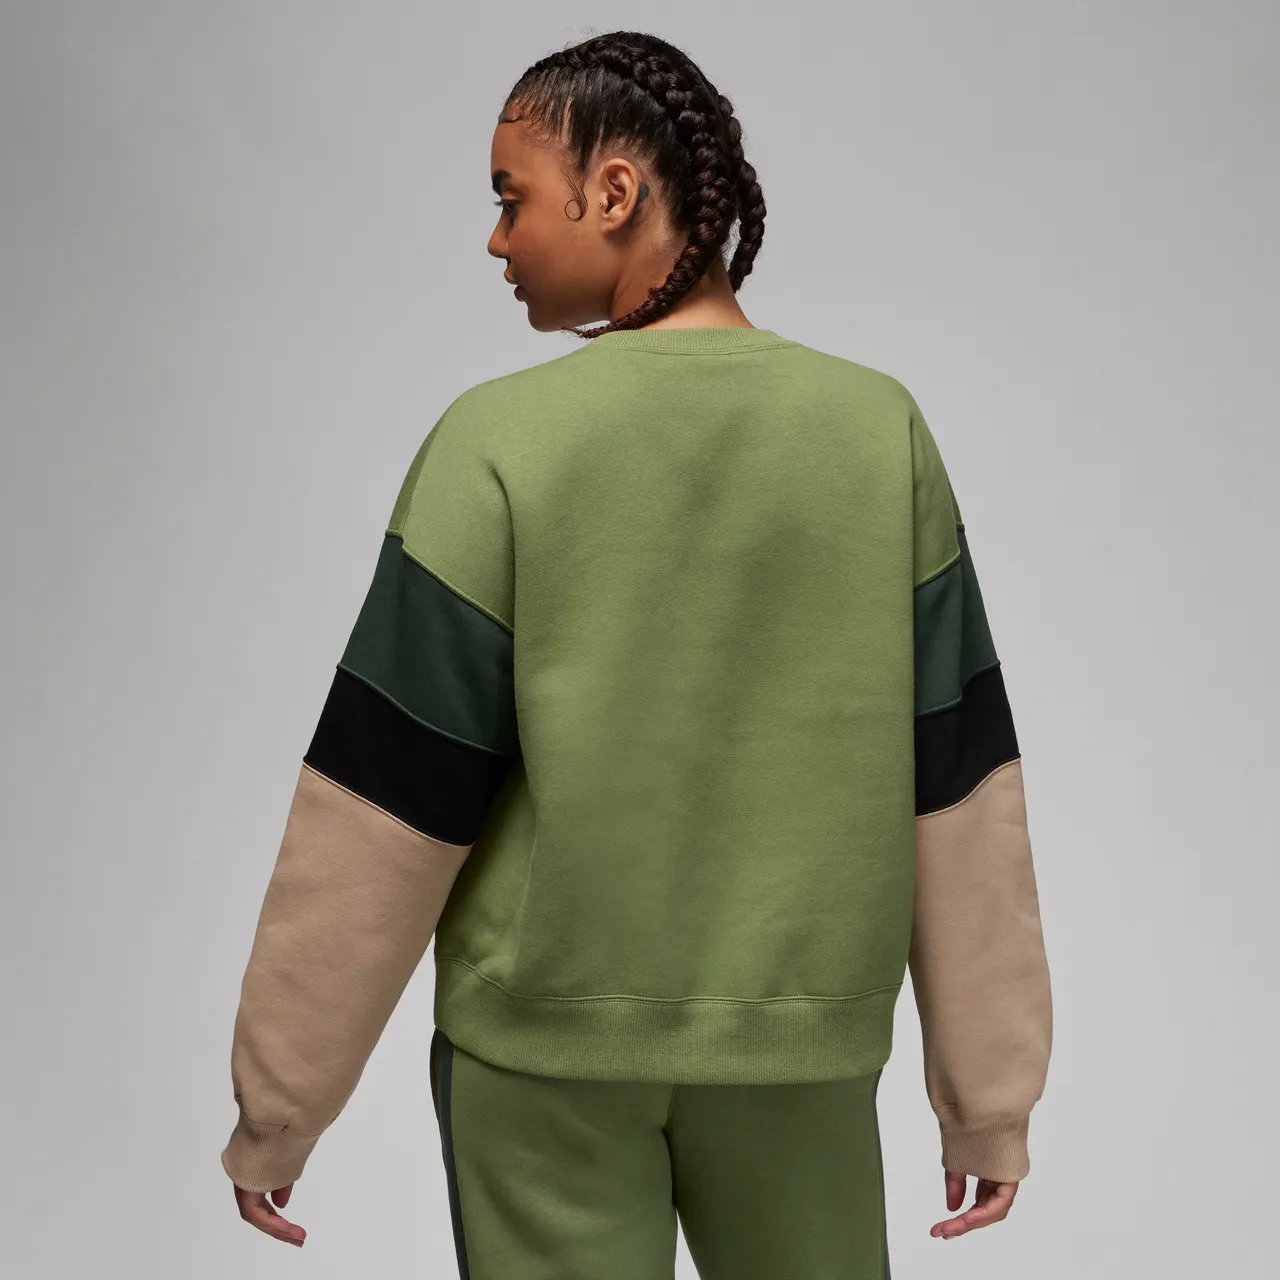 Jordan Brooklyn Fleece Women's Crew-Neck Sweatshirt - Green - Polyester